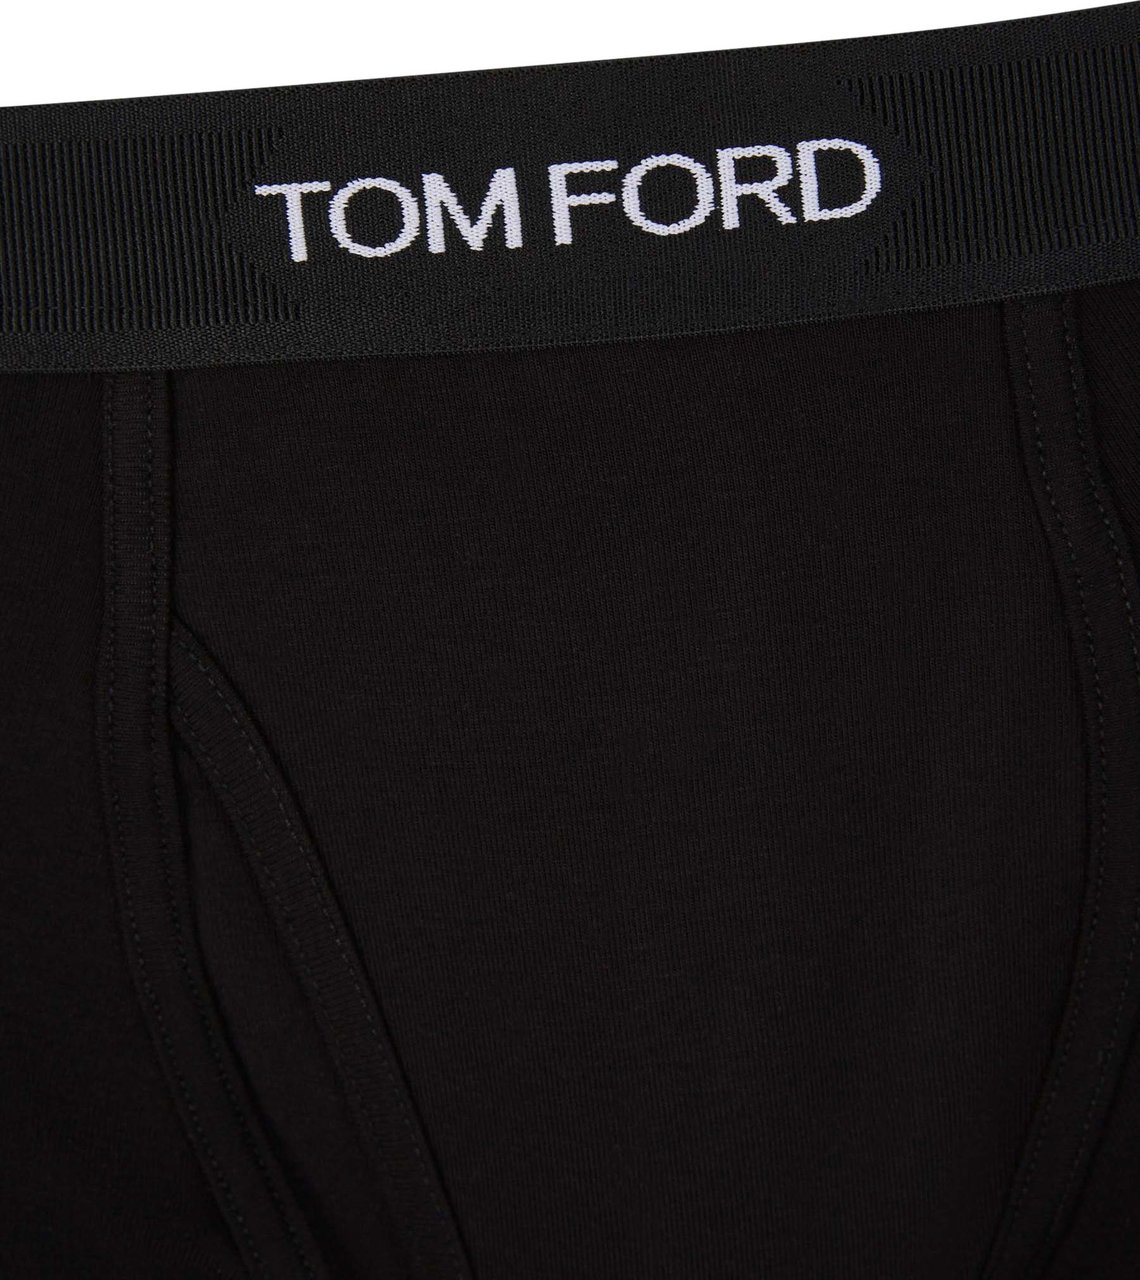 Tom Ford Logo Cotton Boxer Zwart